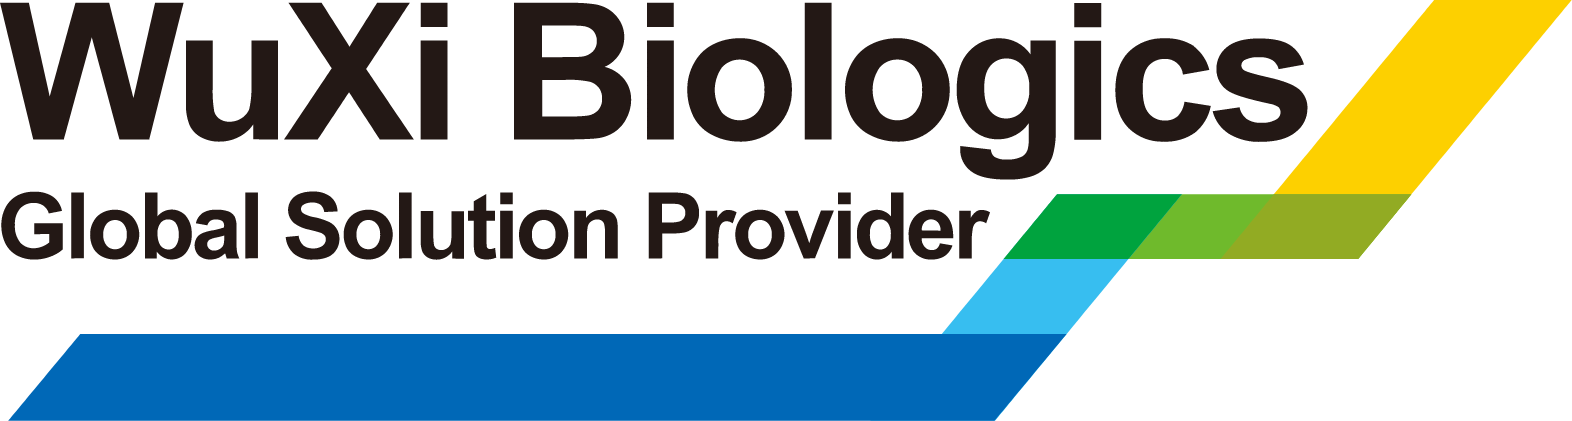 WuXi Biologics logo large (transparent PNG)